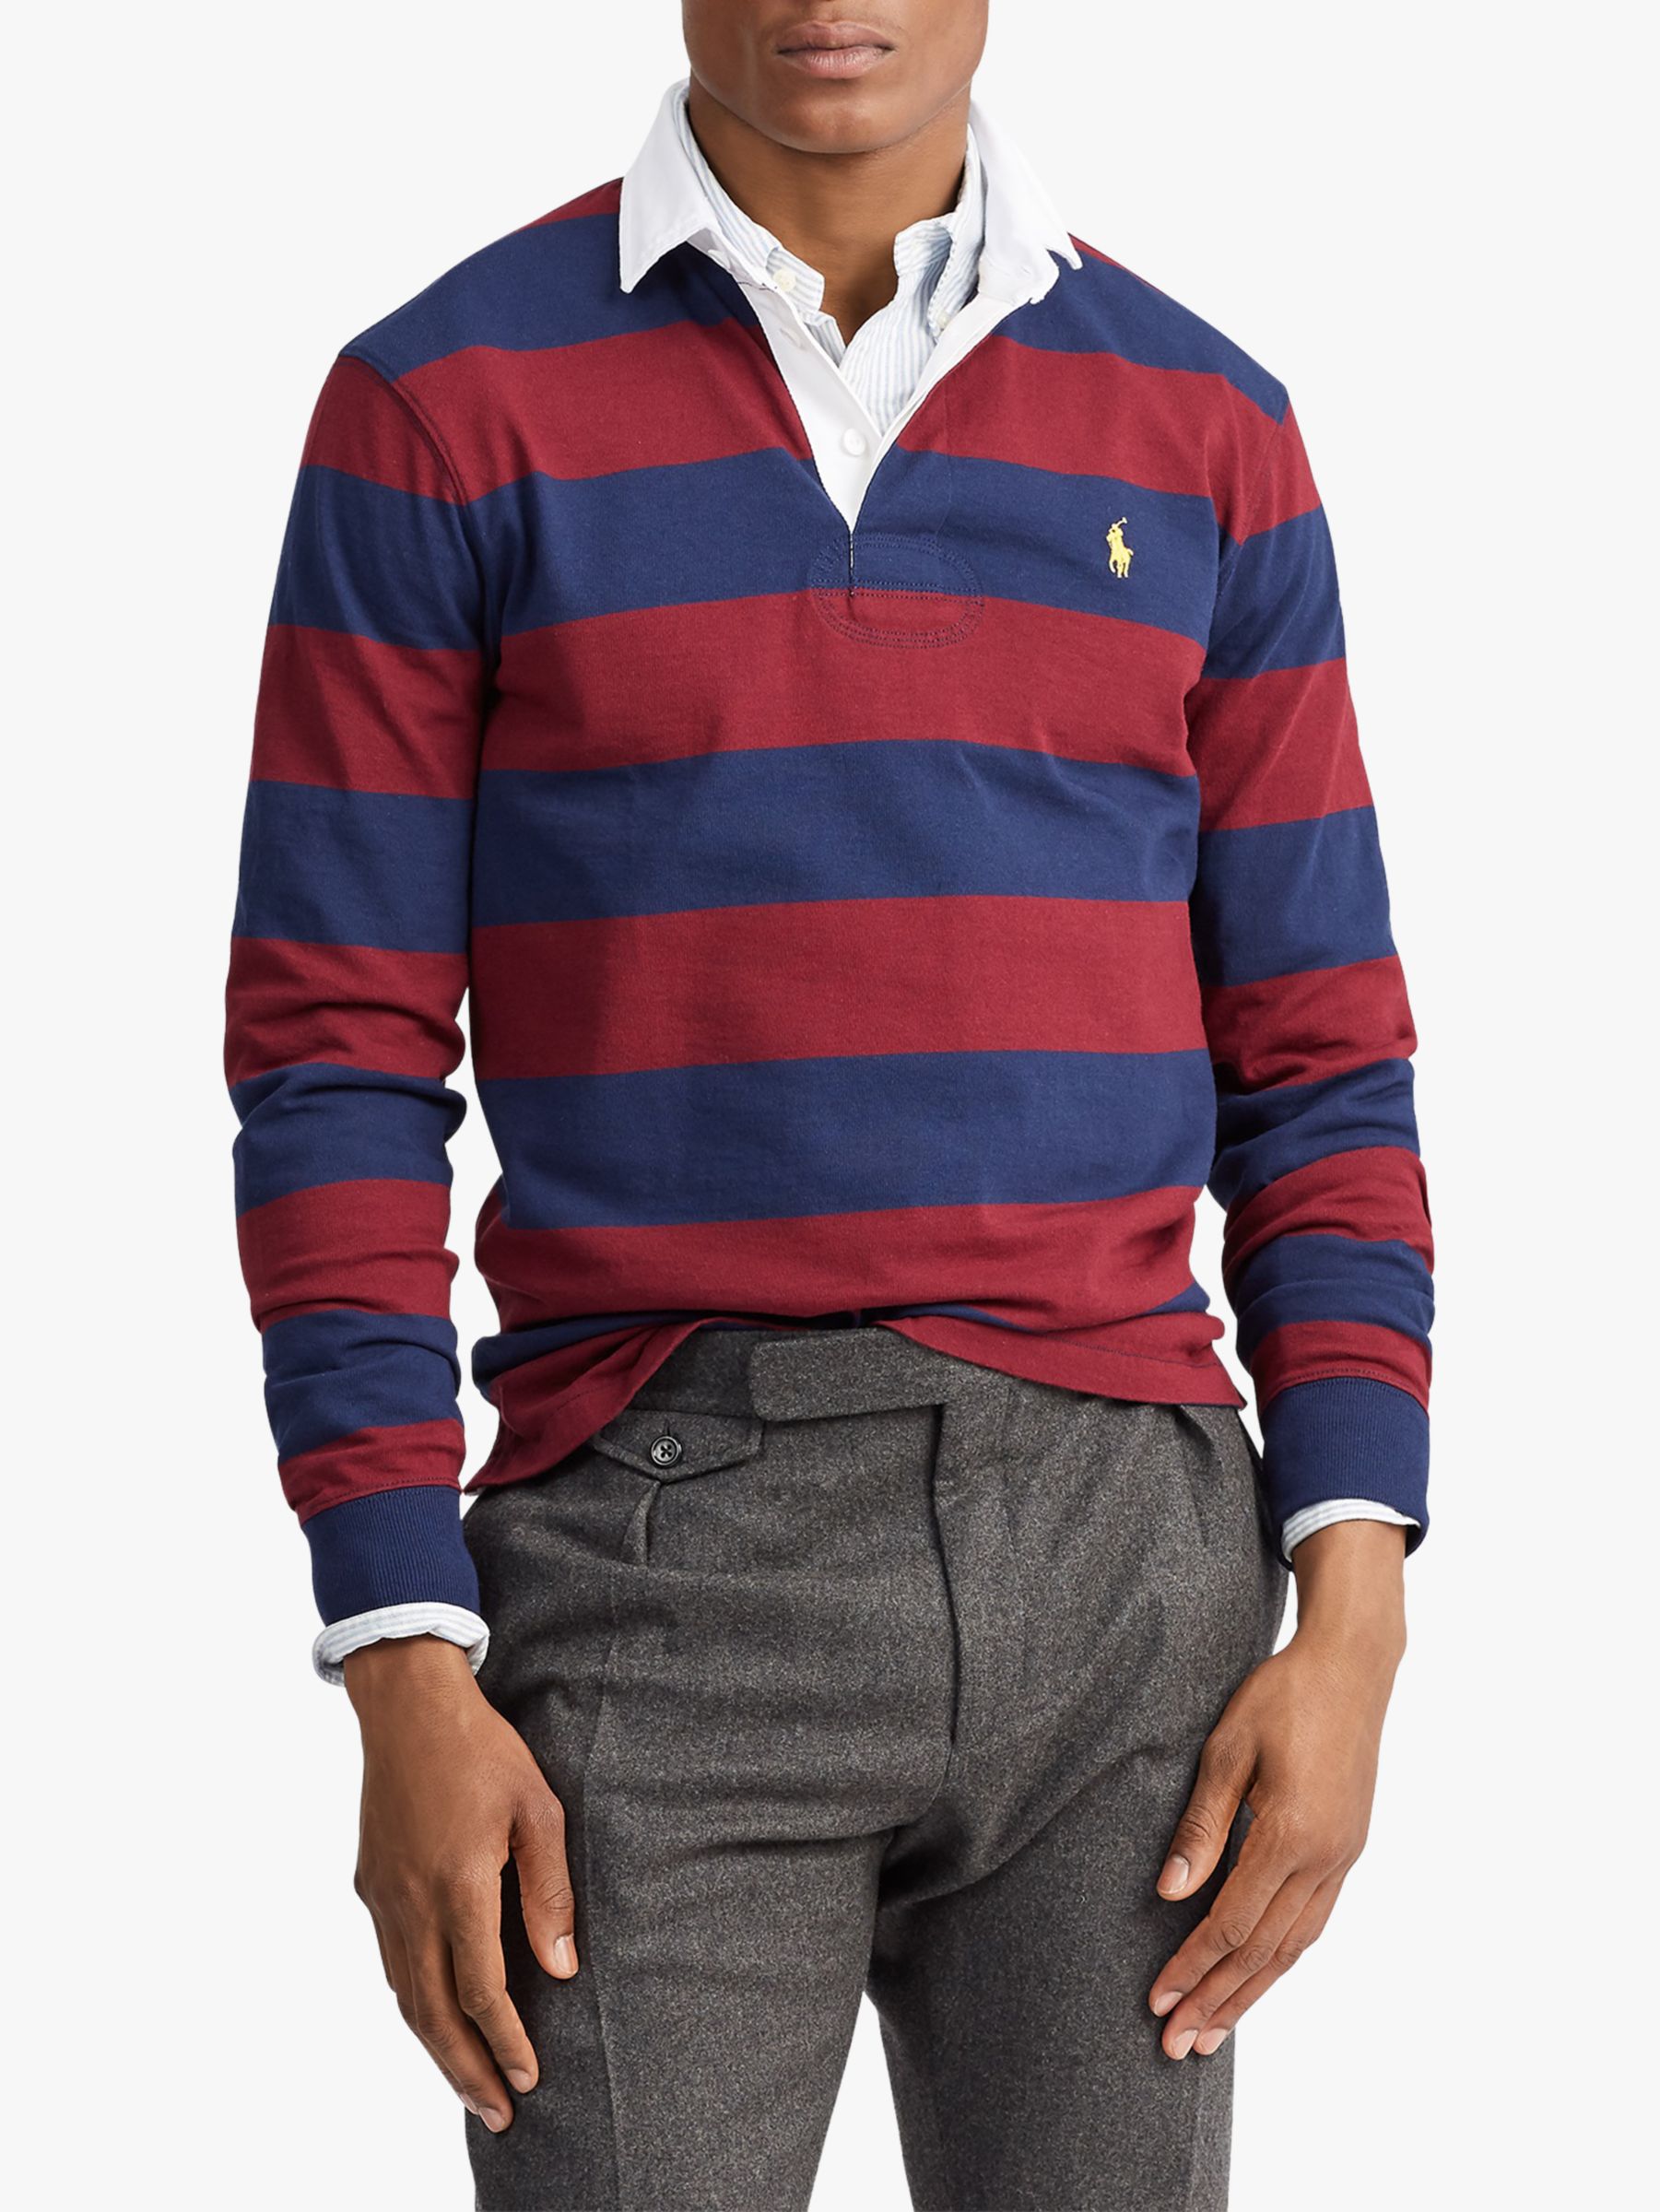 Polo Ralph Lauren Stripe Rugby Shirt at John Lewis & Partners